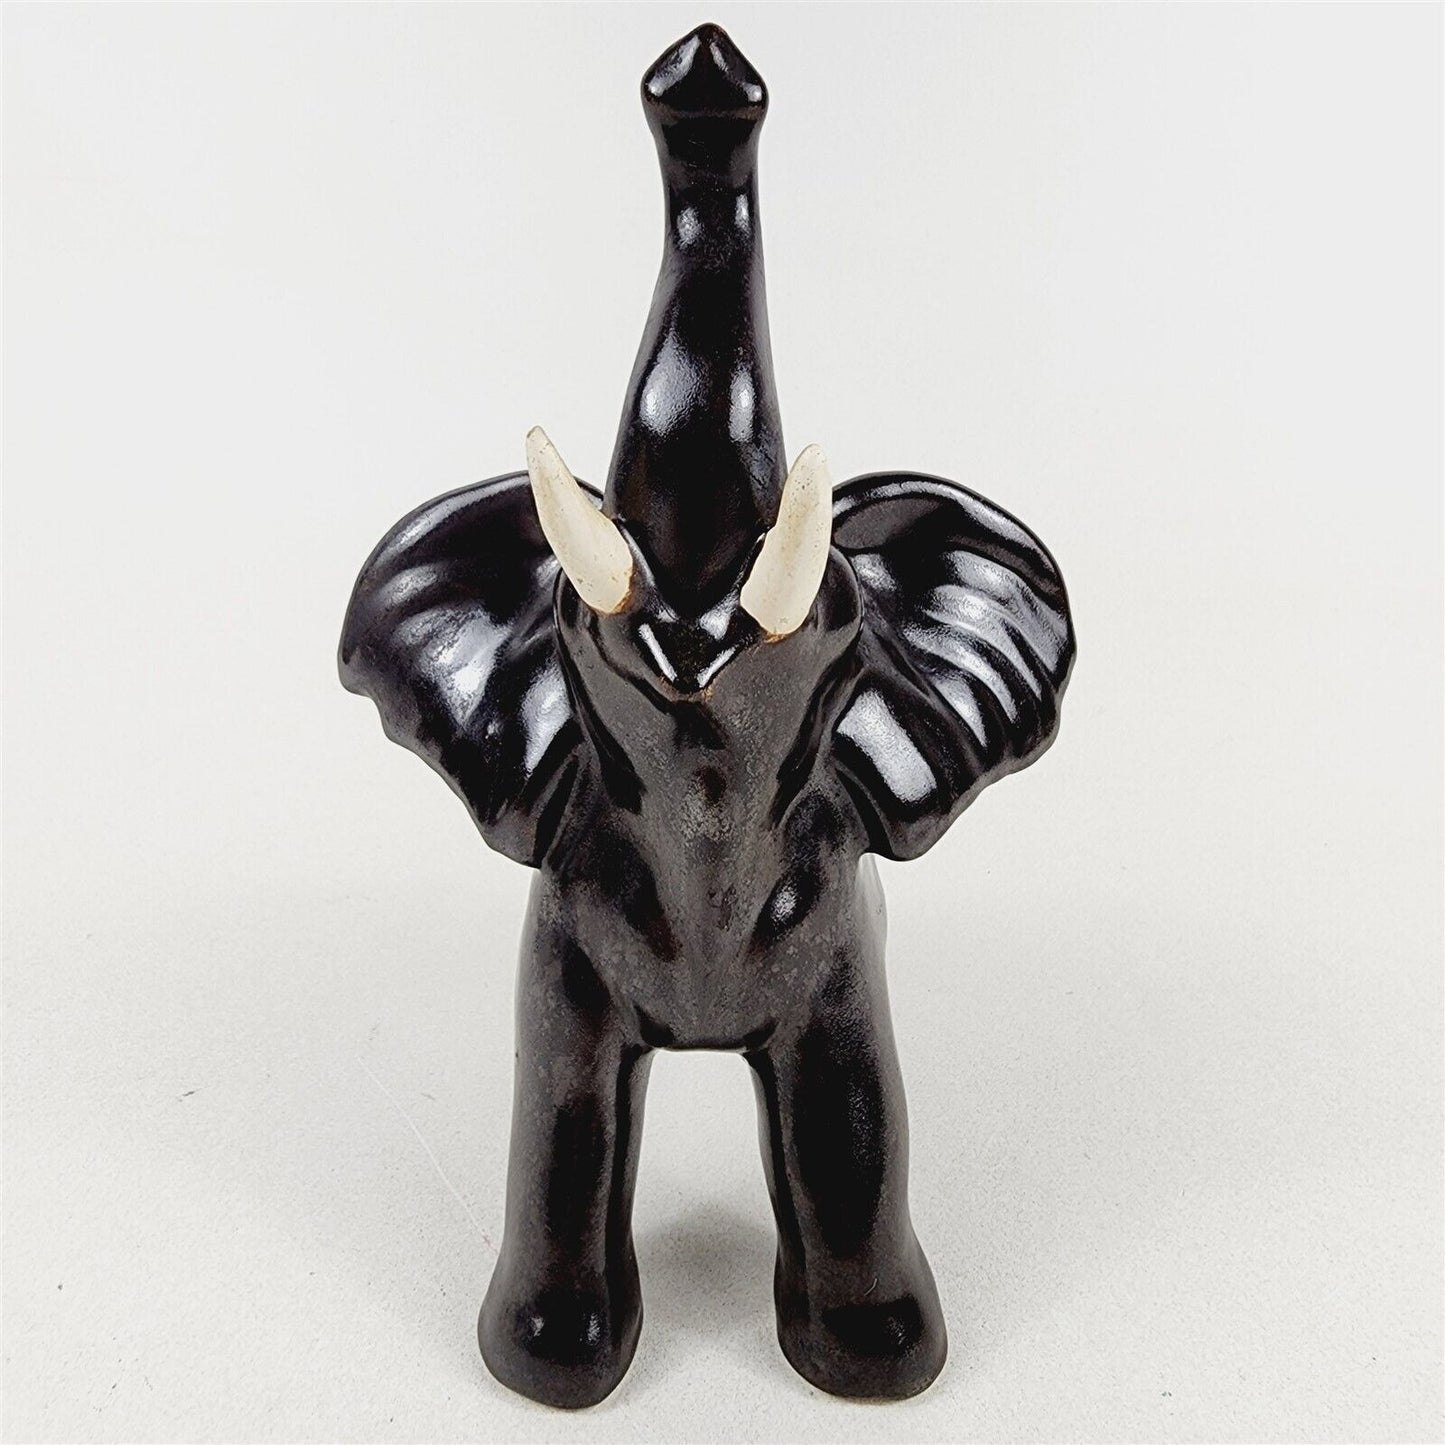 Vintage Ceramic Elephant Figurine Safari Home Decor - 7 1/2" tall